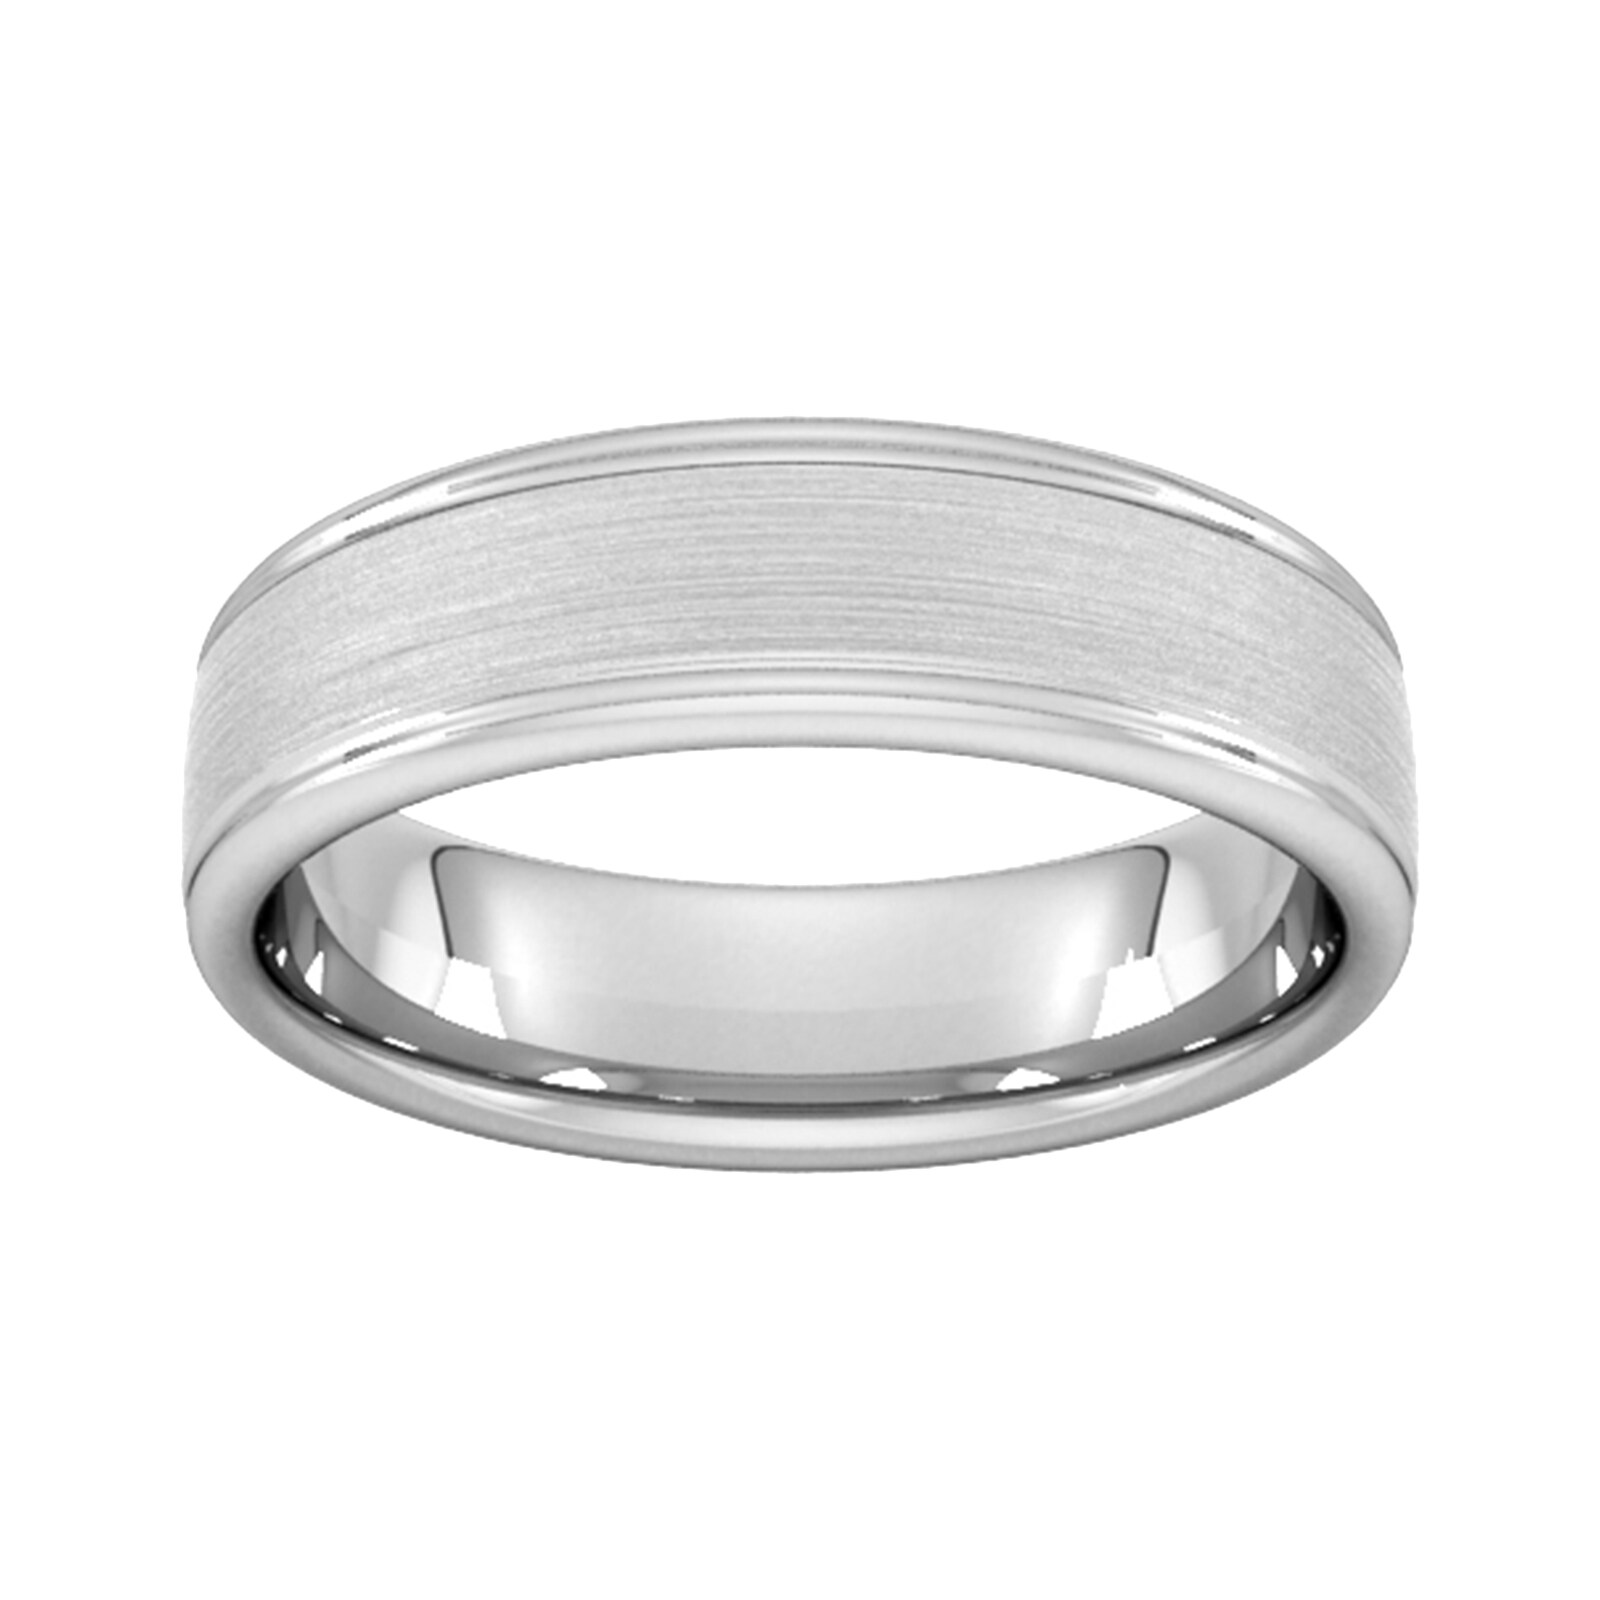 6mm Slight Court Standard Matt Centre With Grooves Wedding Ring In 950 Palladium - Ring Size L